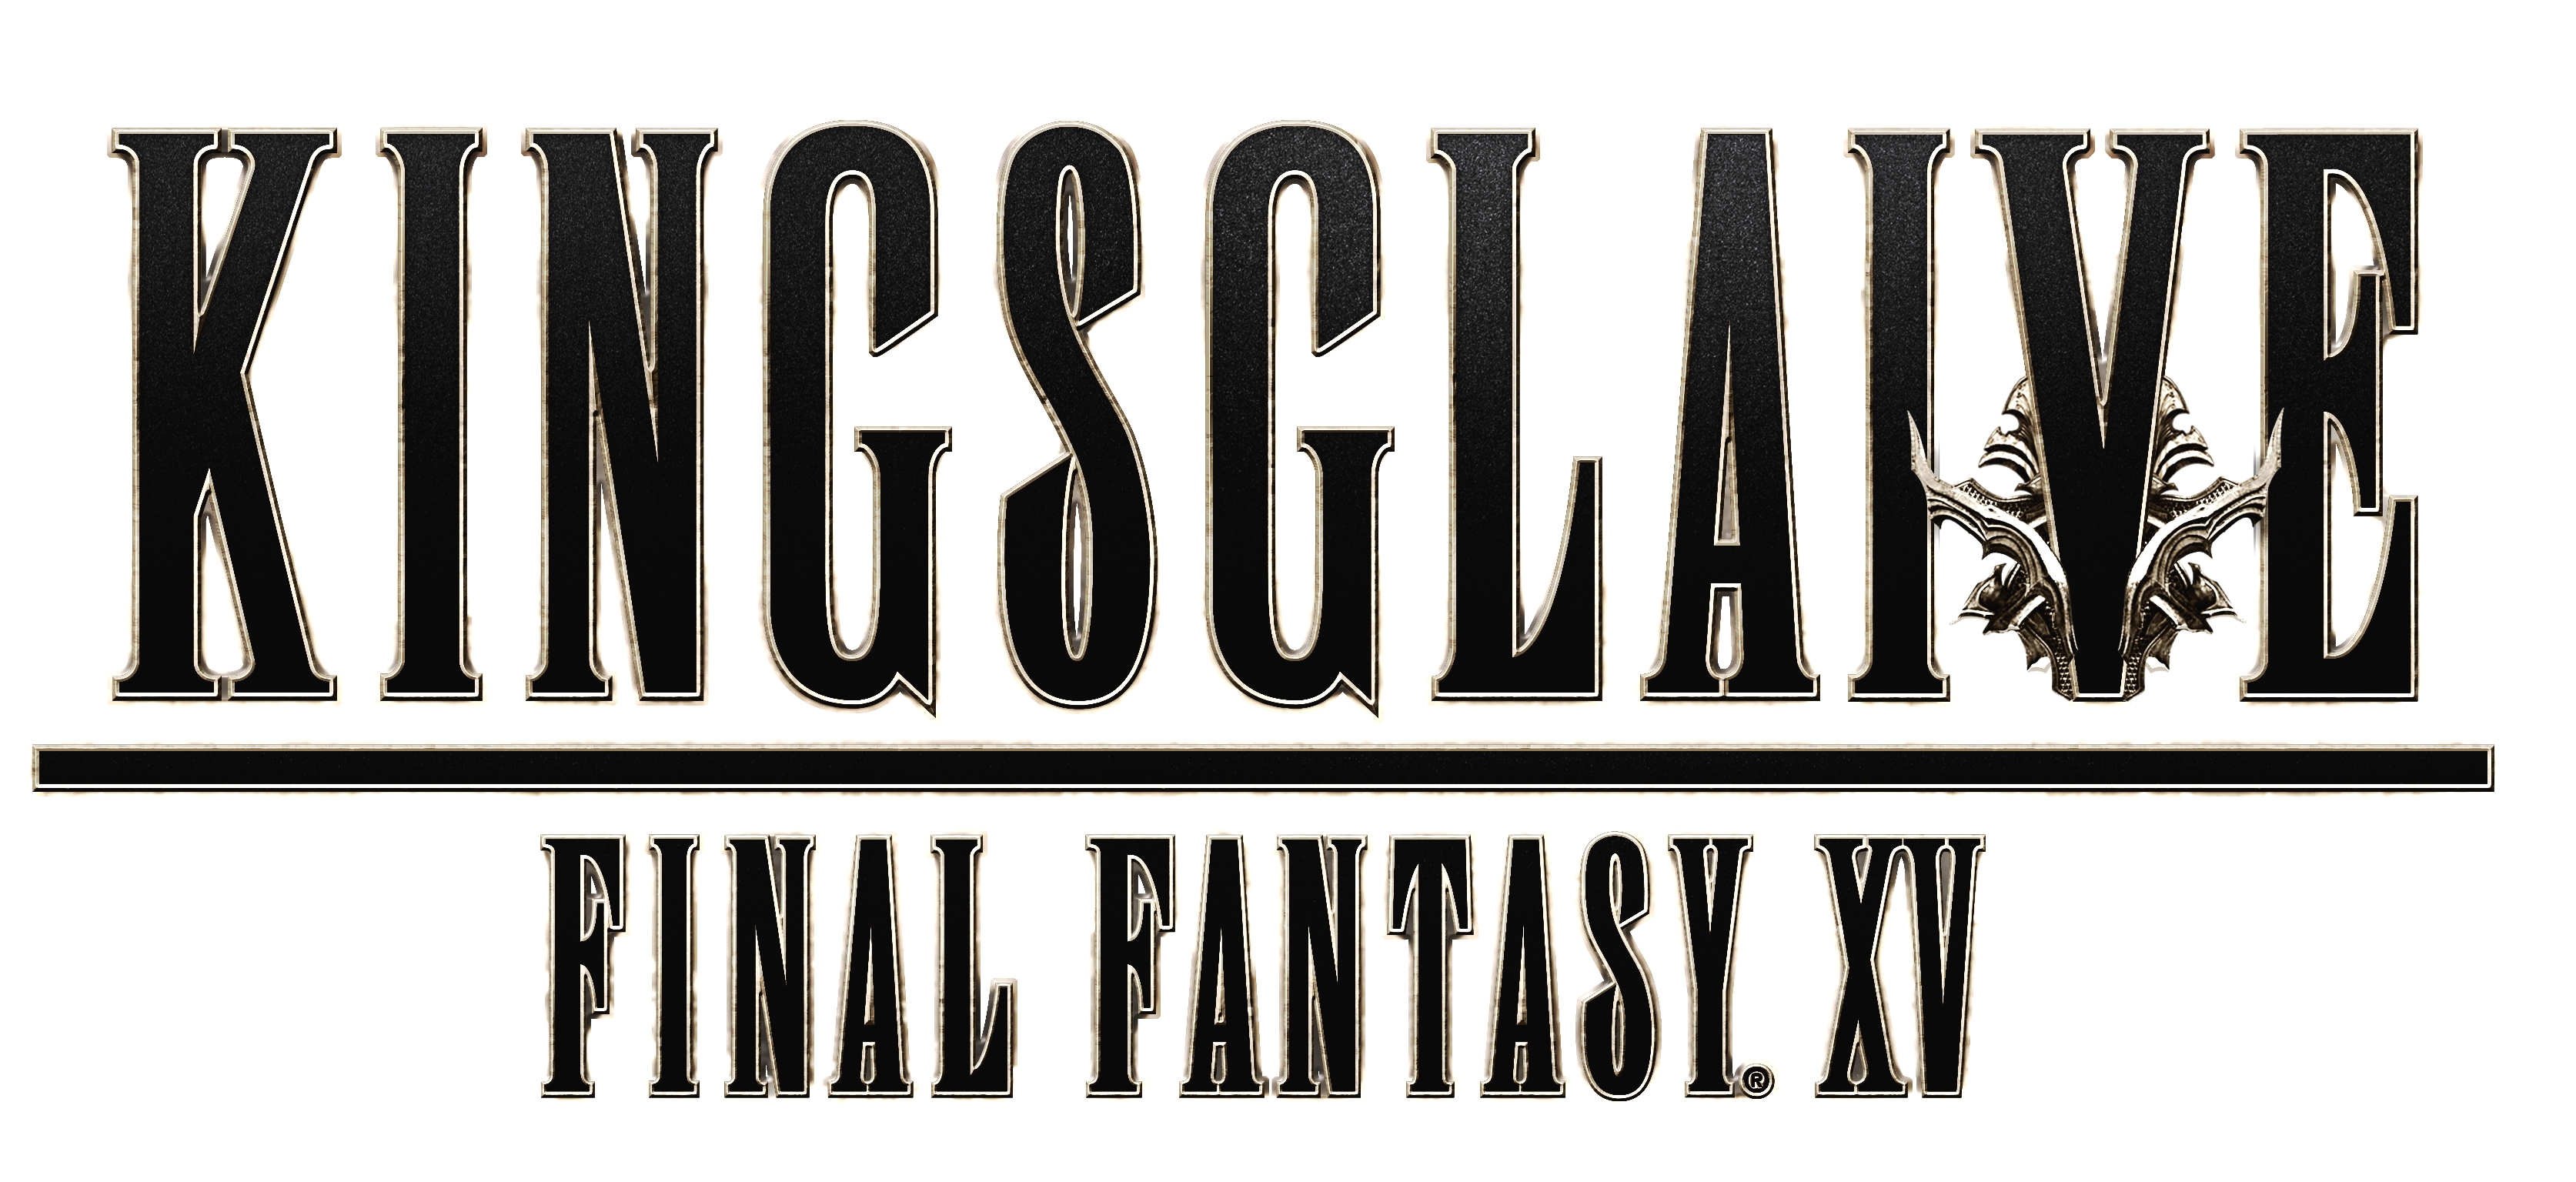 Film Collections Box Final Fantasy Xv 特典追加発表 Brotherhood Ffxv Kingsglaive Ffxv の新情報も 株式会社アニプレックスのプレスリリース